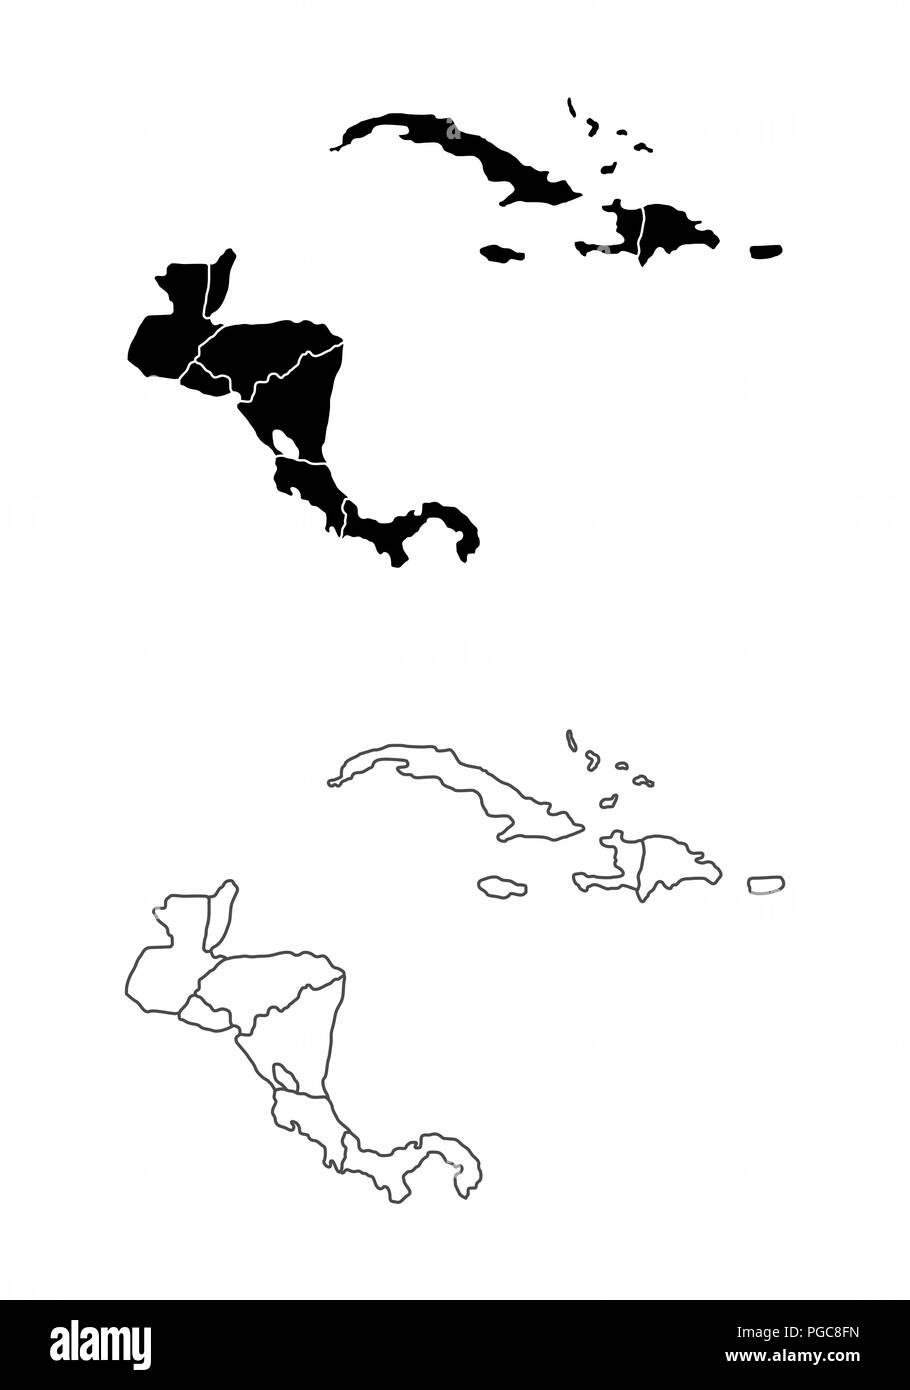 Mittelamerika und Karibik Karten Stock Vektor